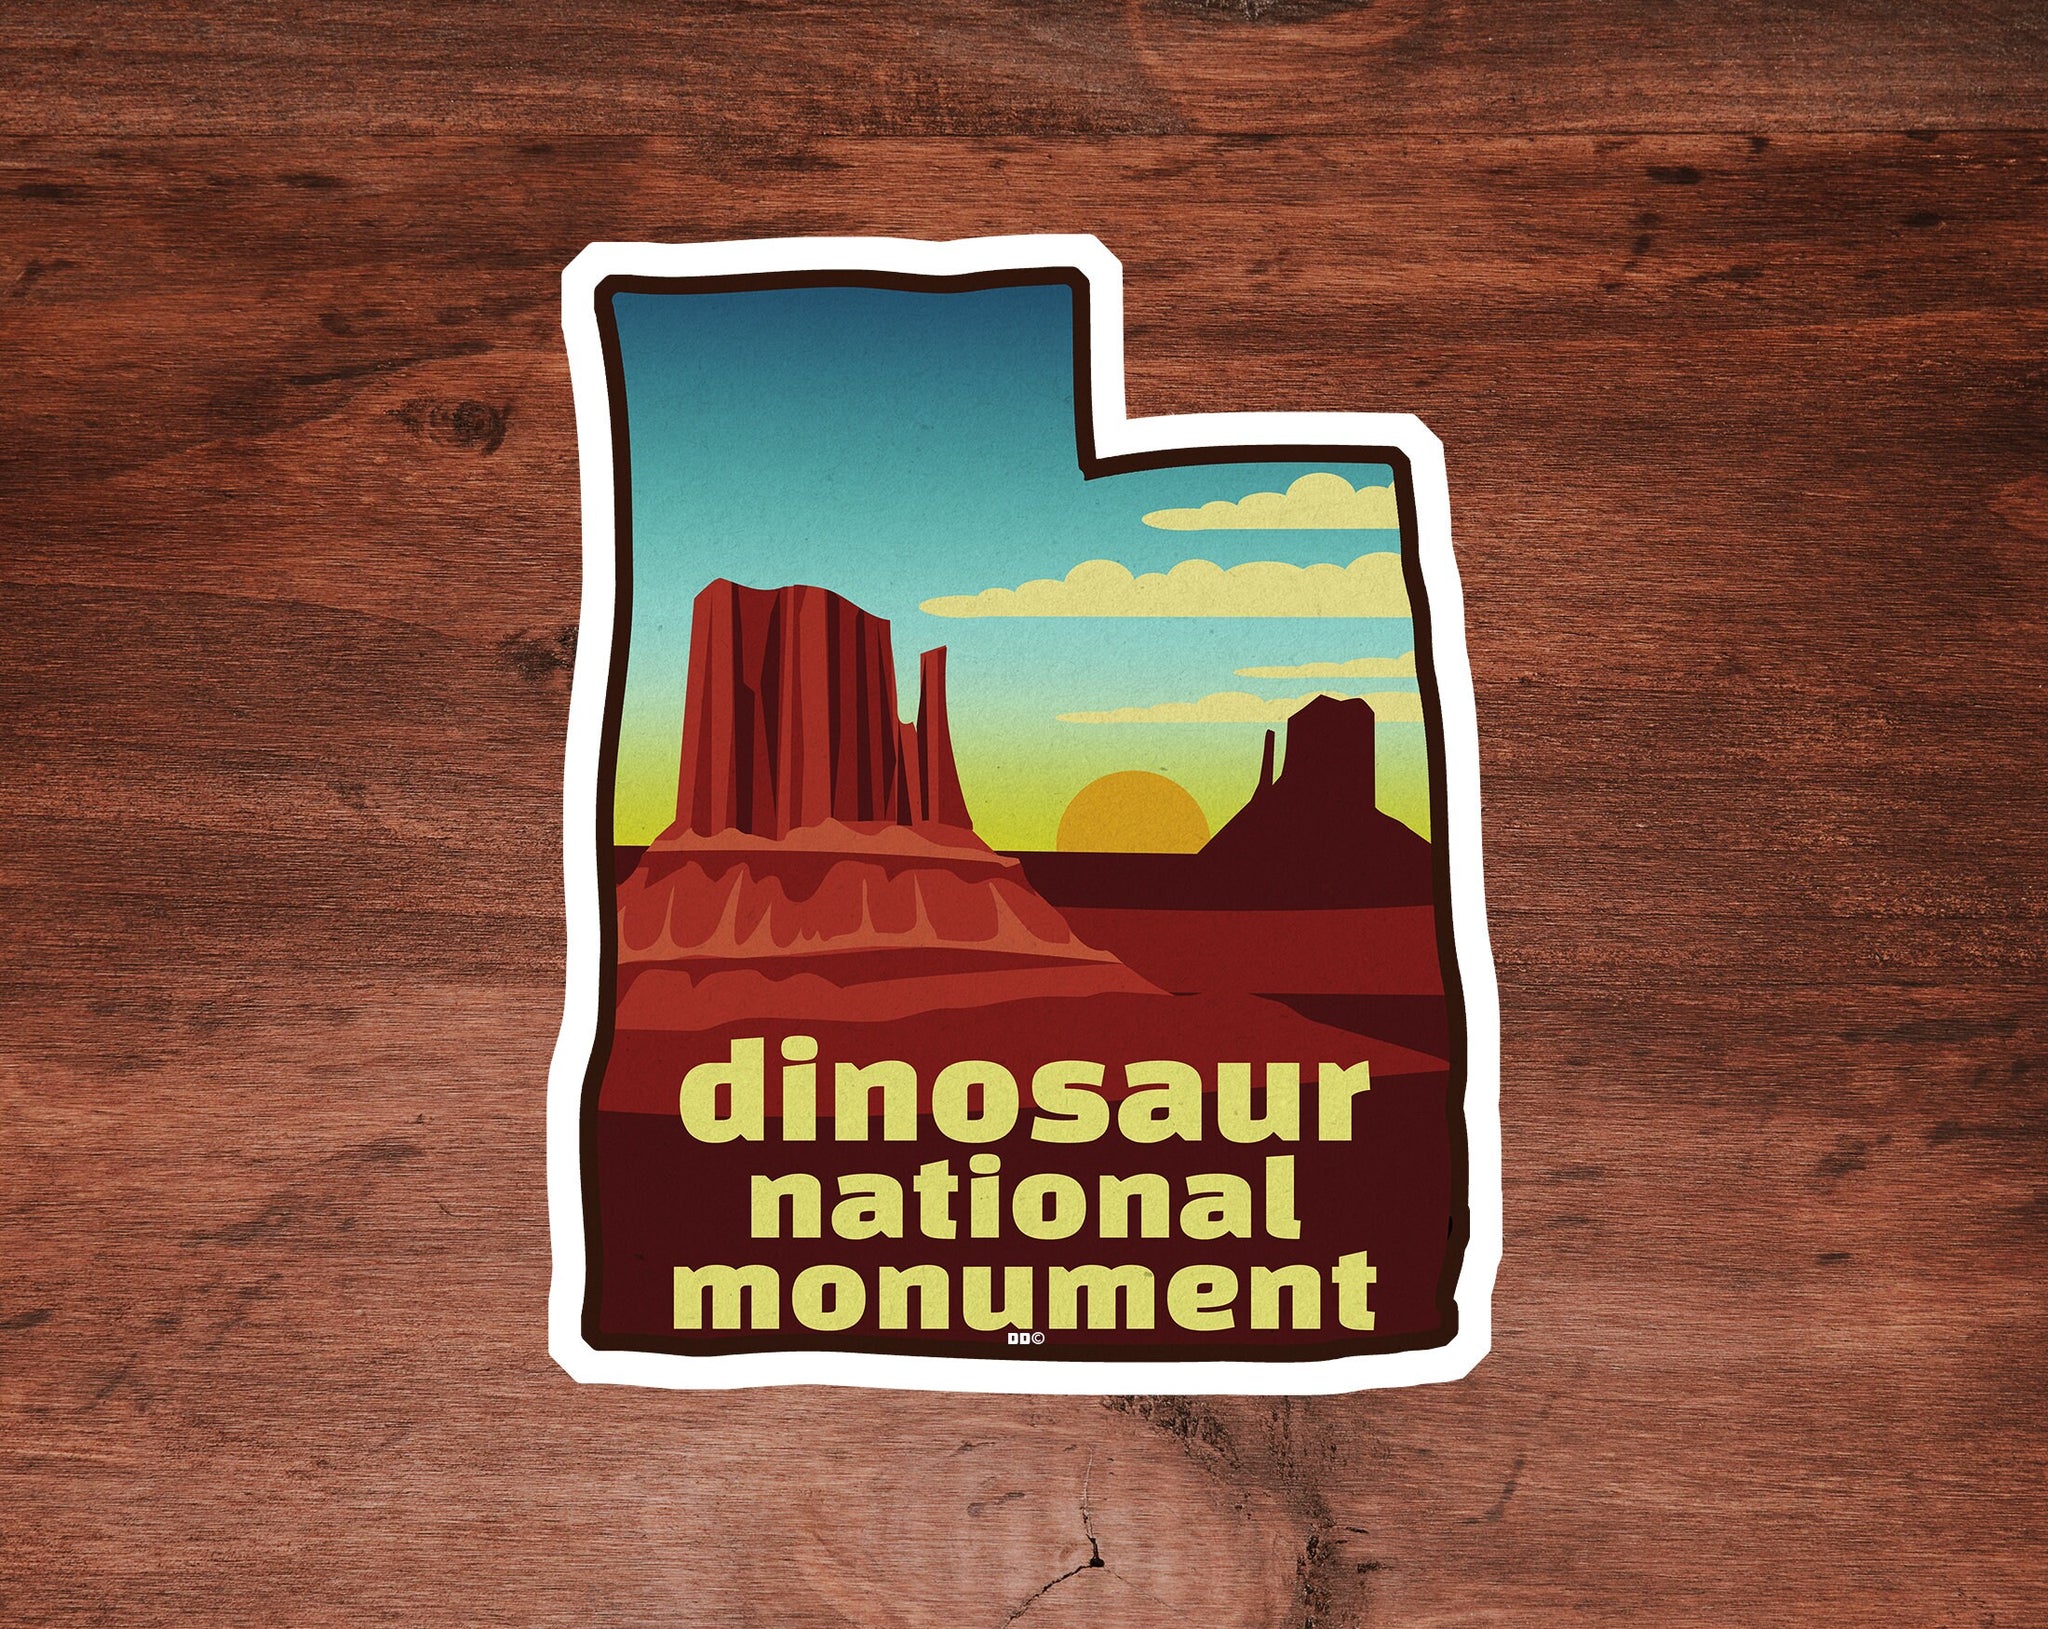 Dinosaur National Monument Utah Sticker Decal 2.75" x 3.5"